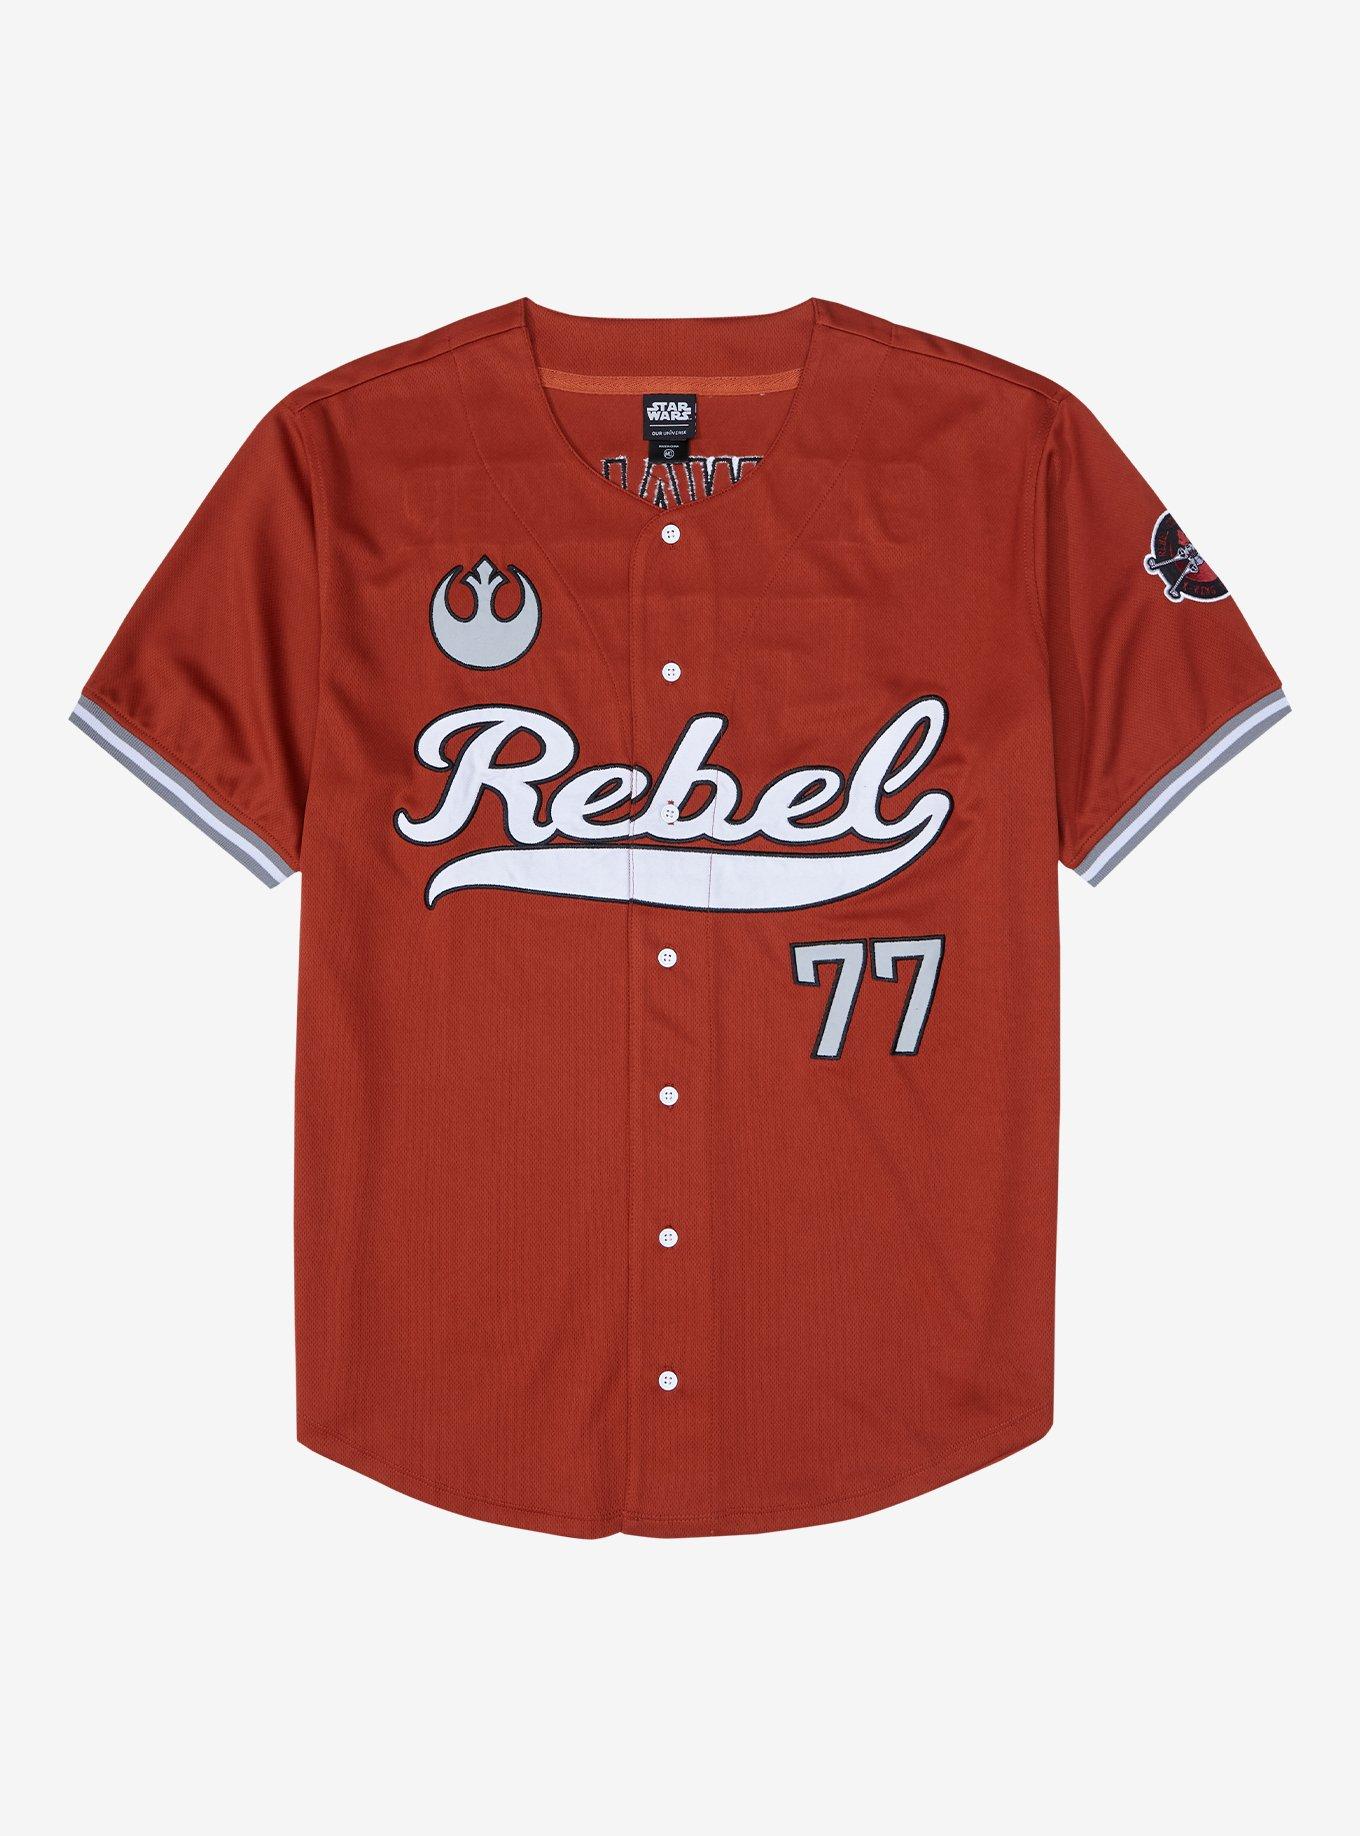 Star Wars Luke Skywalker Rebel Baseball Jersey - BoxLunch